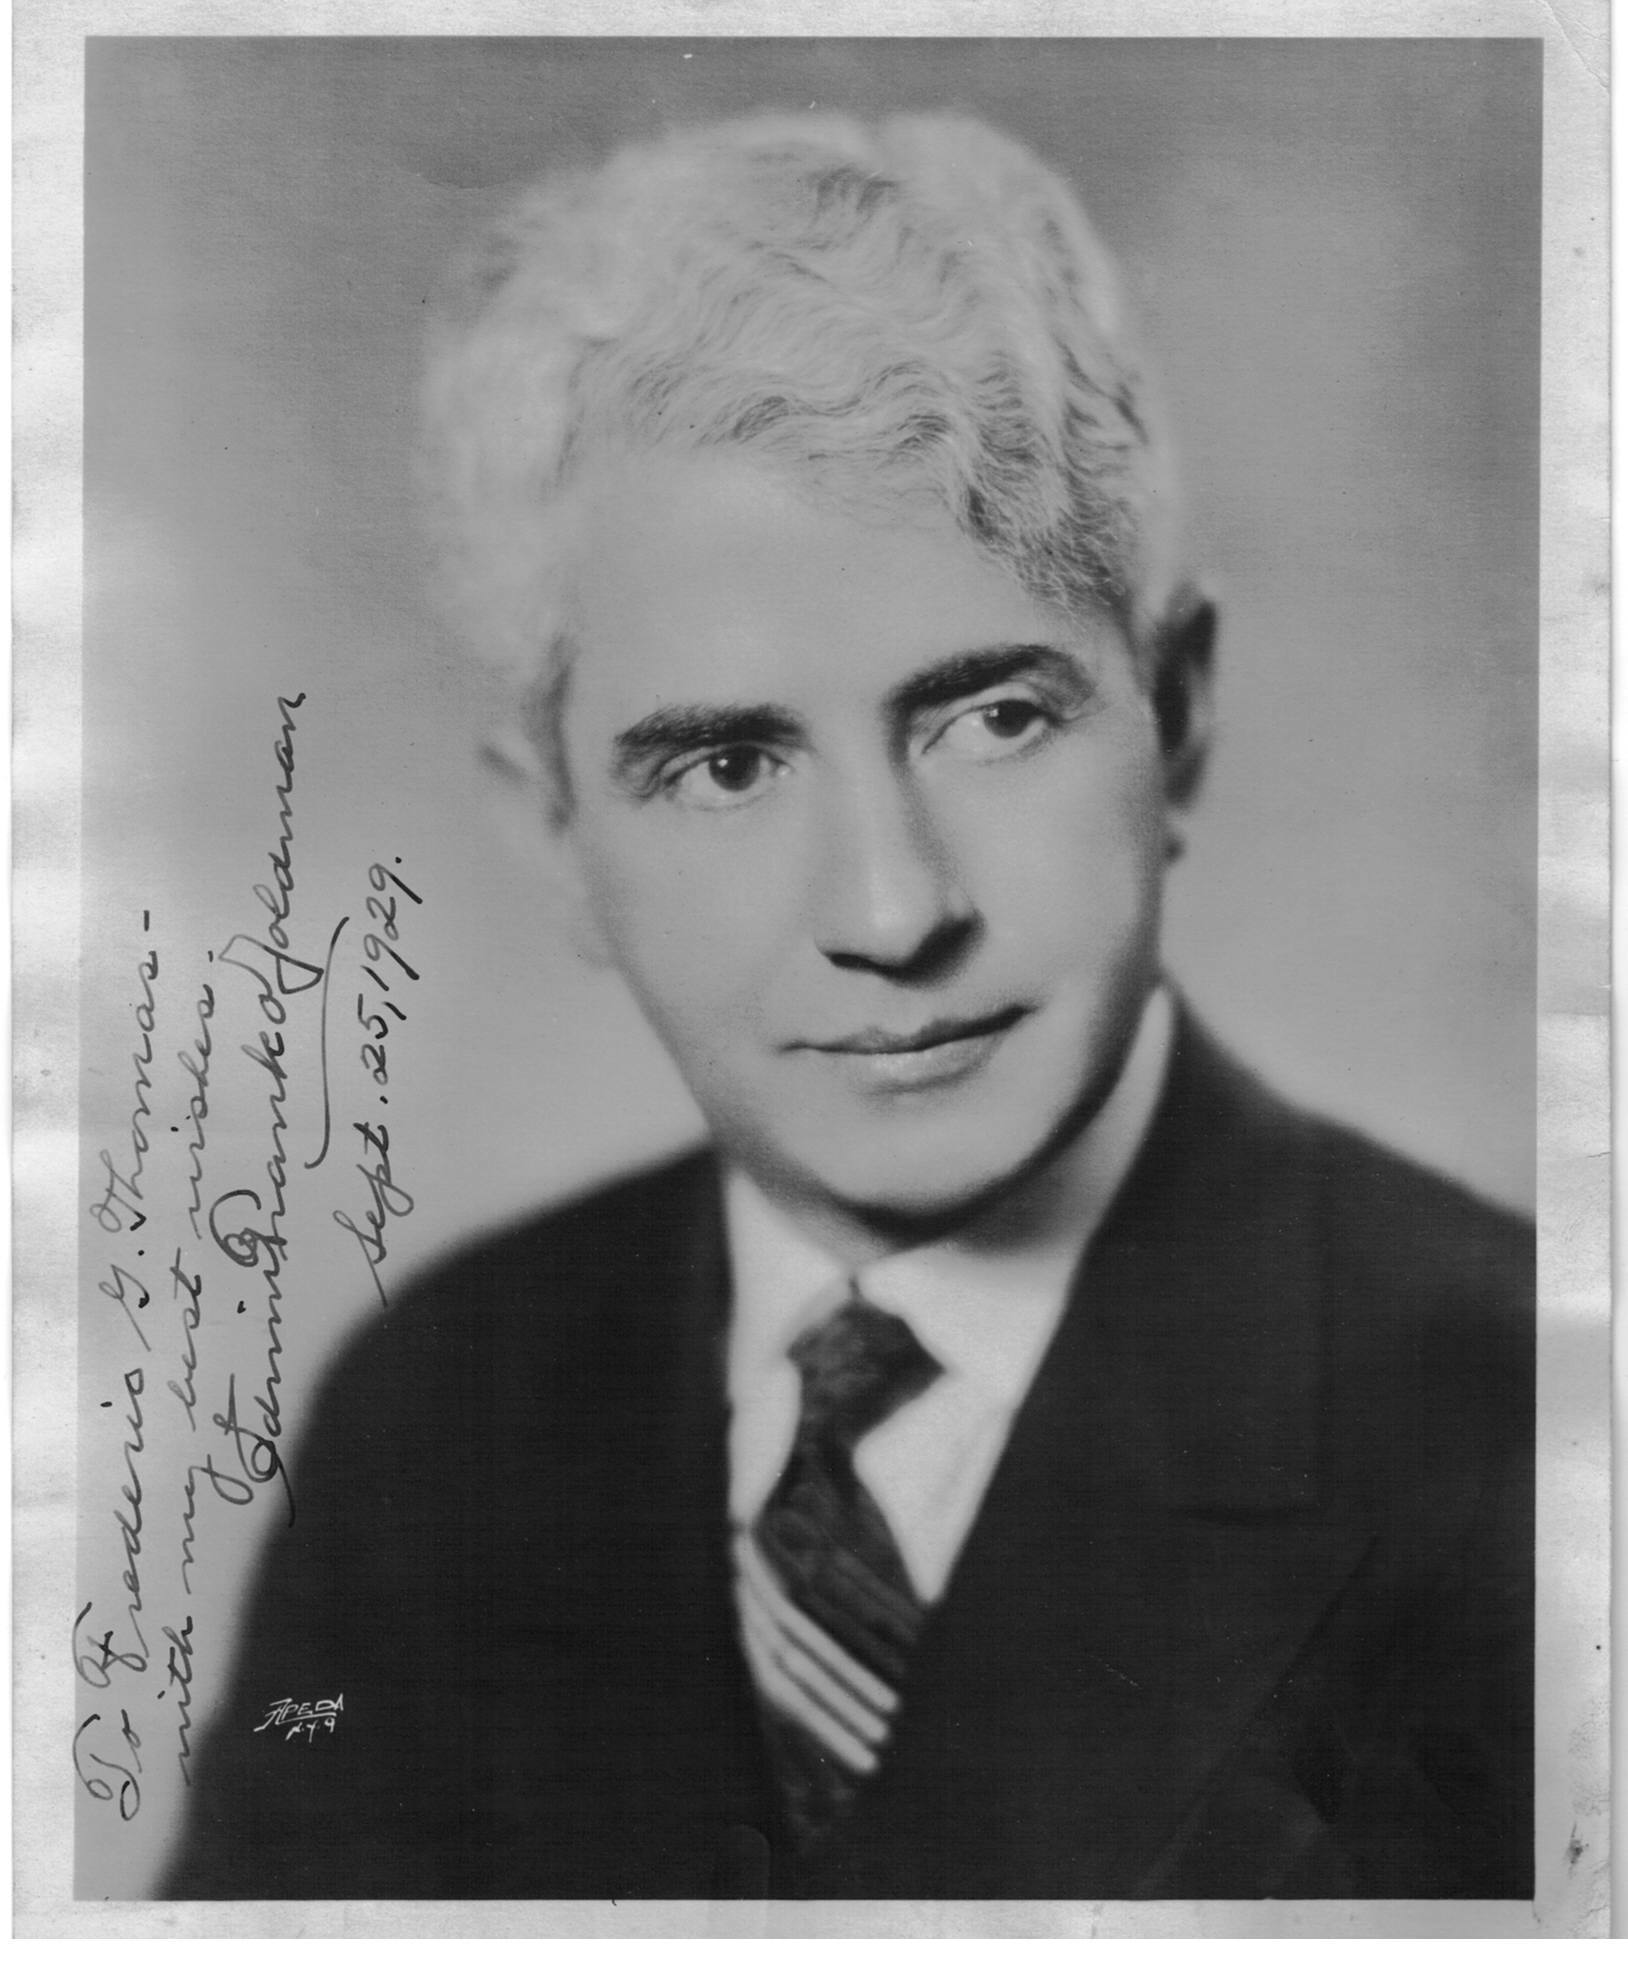 My uncle's autographed photo of Goldman